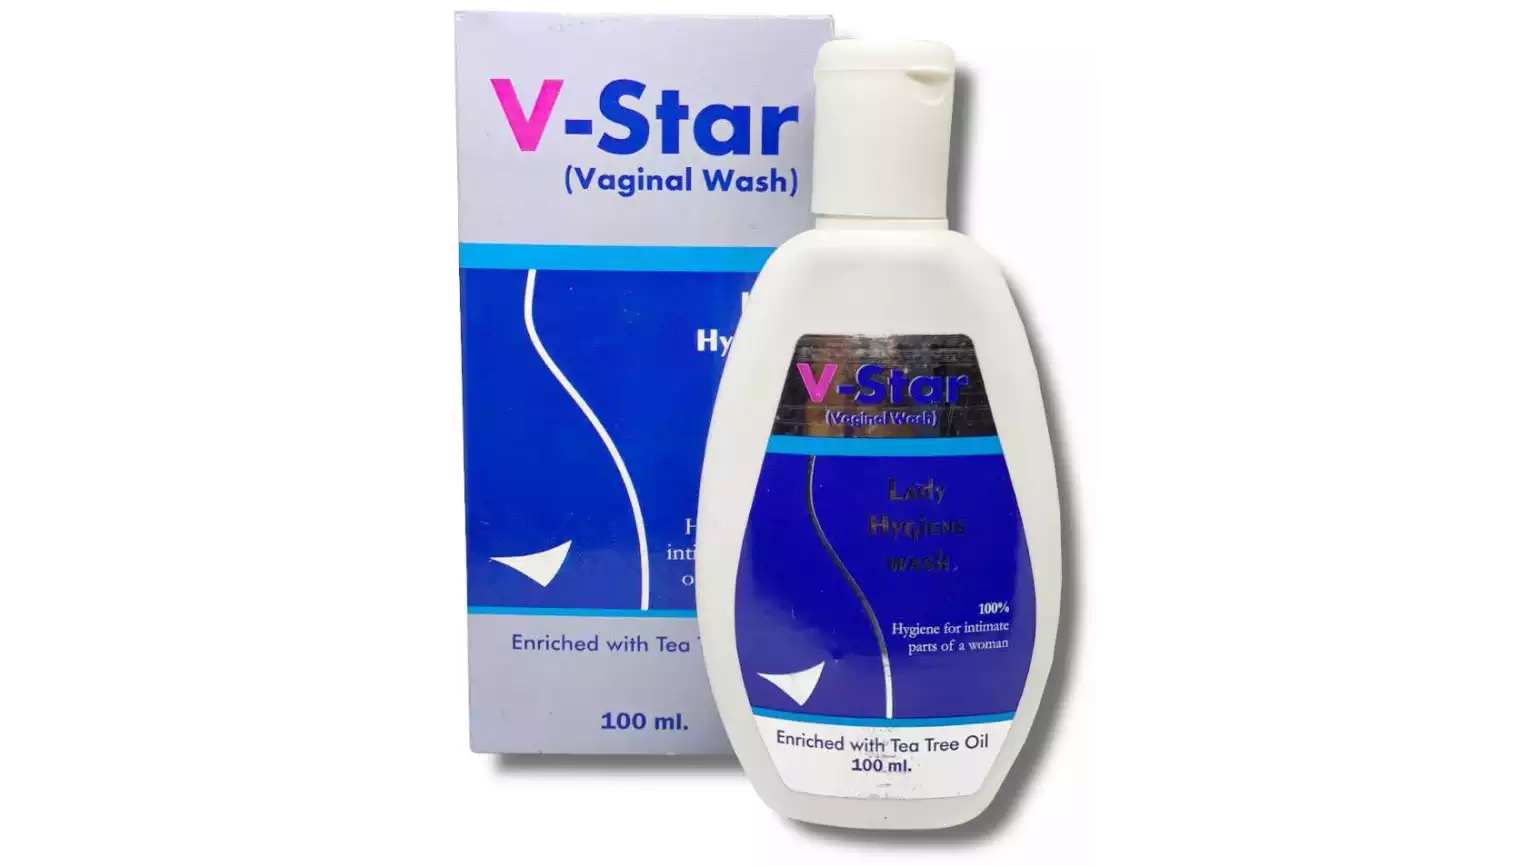 Tantraxx V-Star (Vaginal Wash) (100ml)